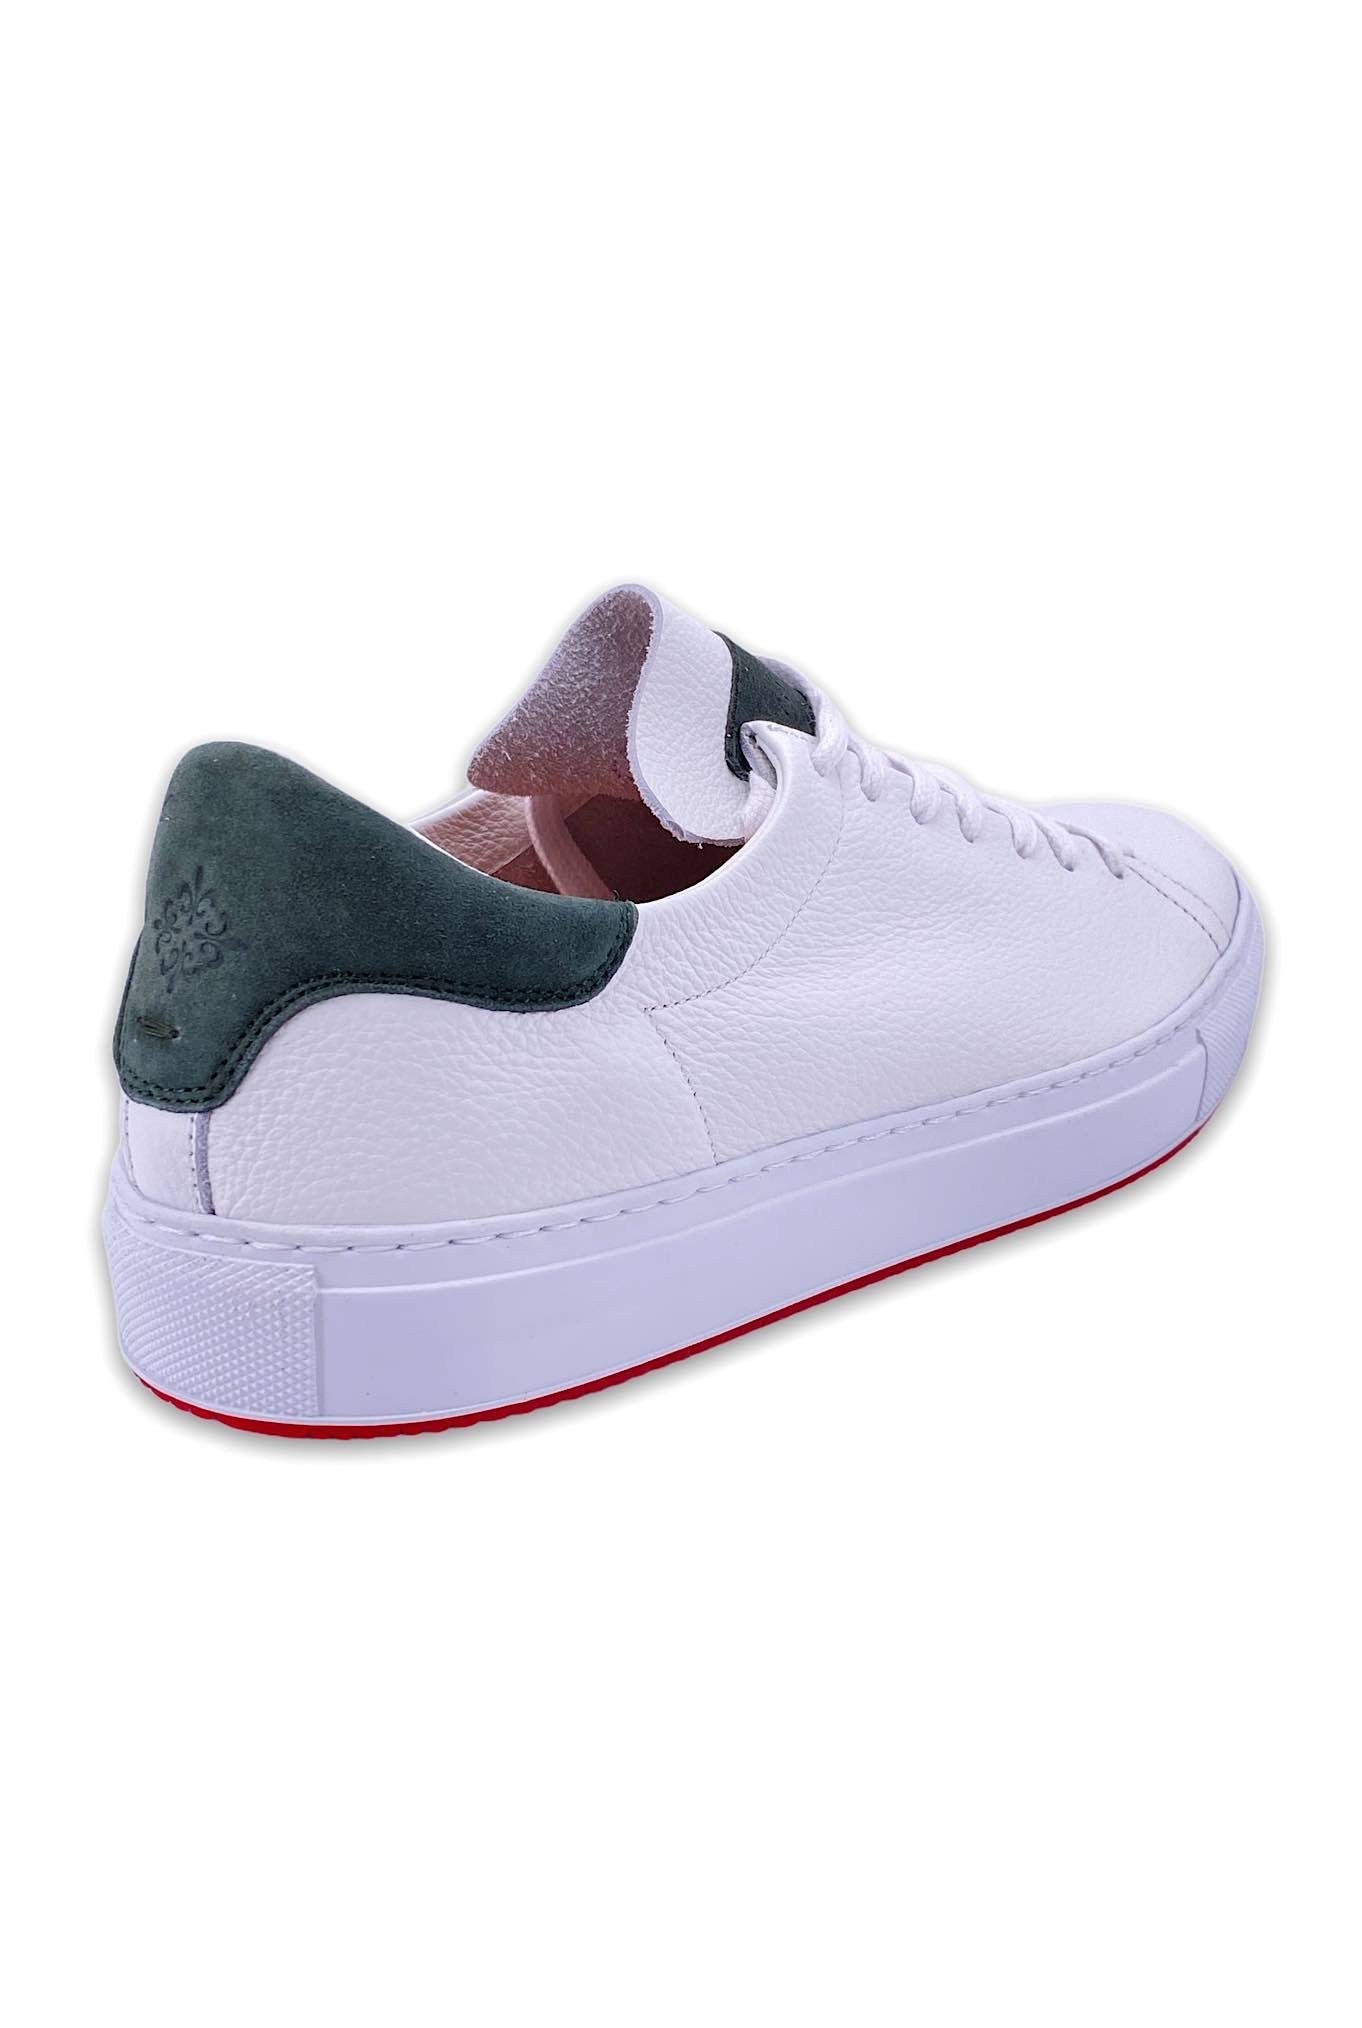 ANDREA VENTURA Sneakers Pelle Cervo Bianco Verde